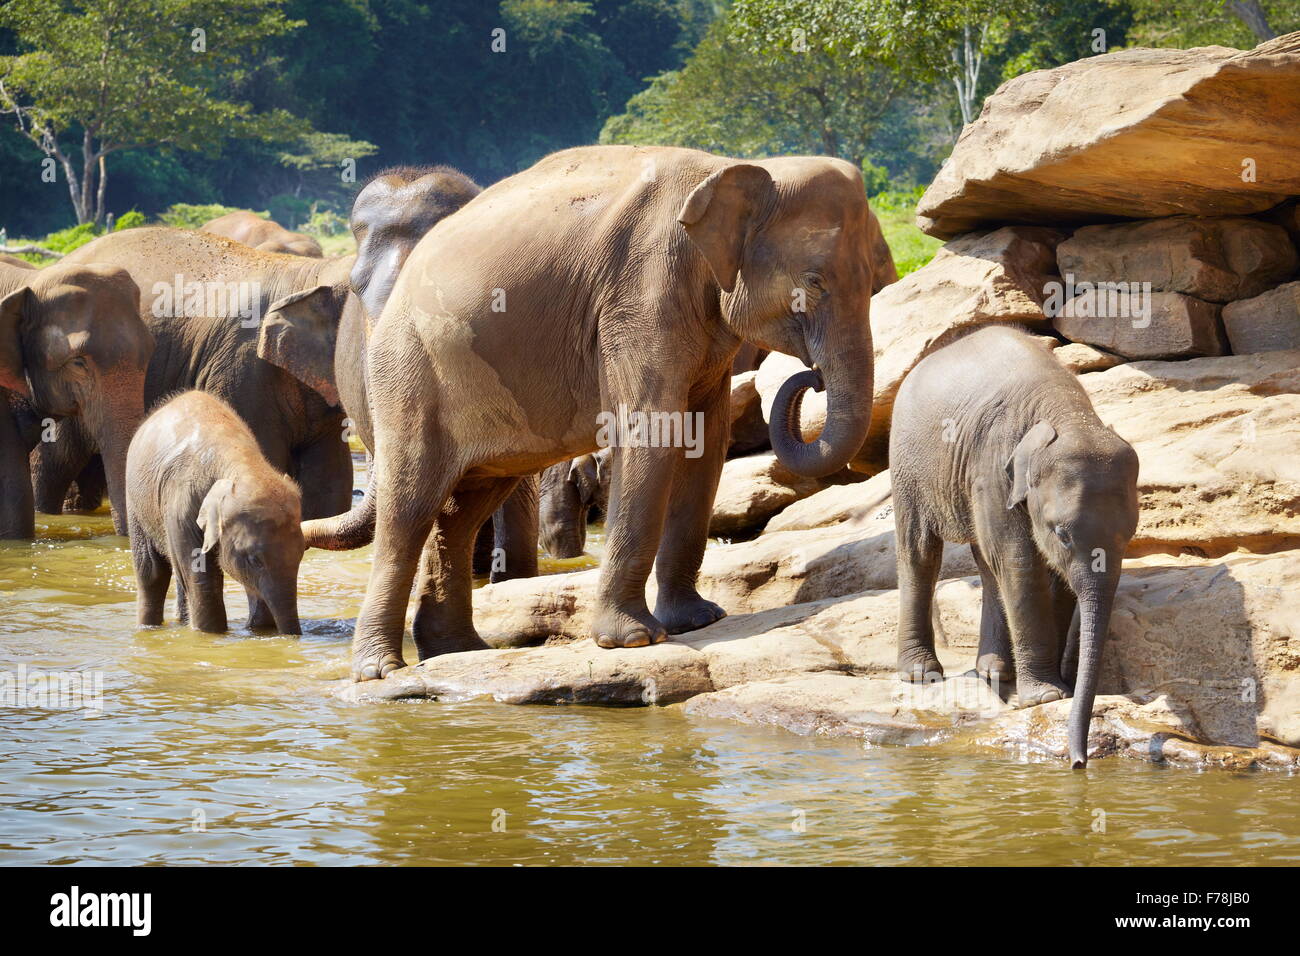 Sri Lanka - Pinnawela Elefantenwaisenhaus für wilde asiatische Elefanten Stockfoto